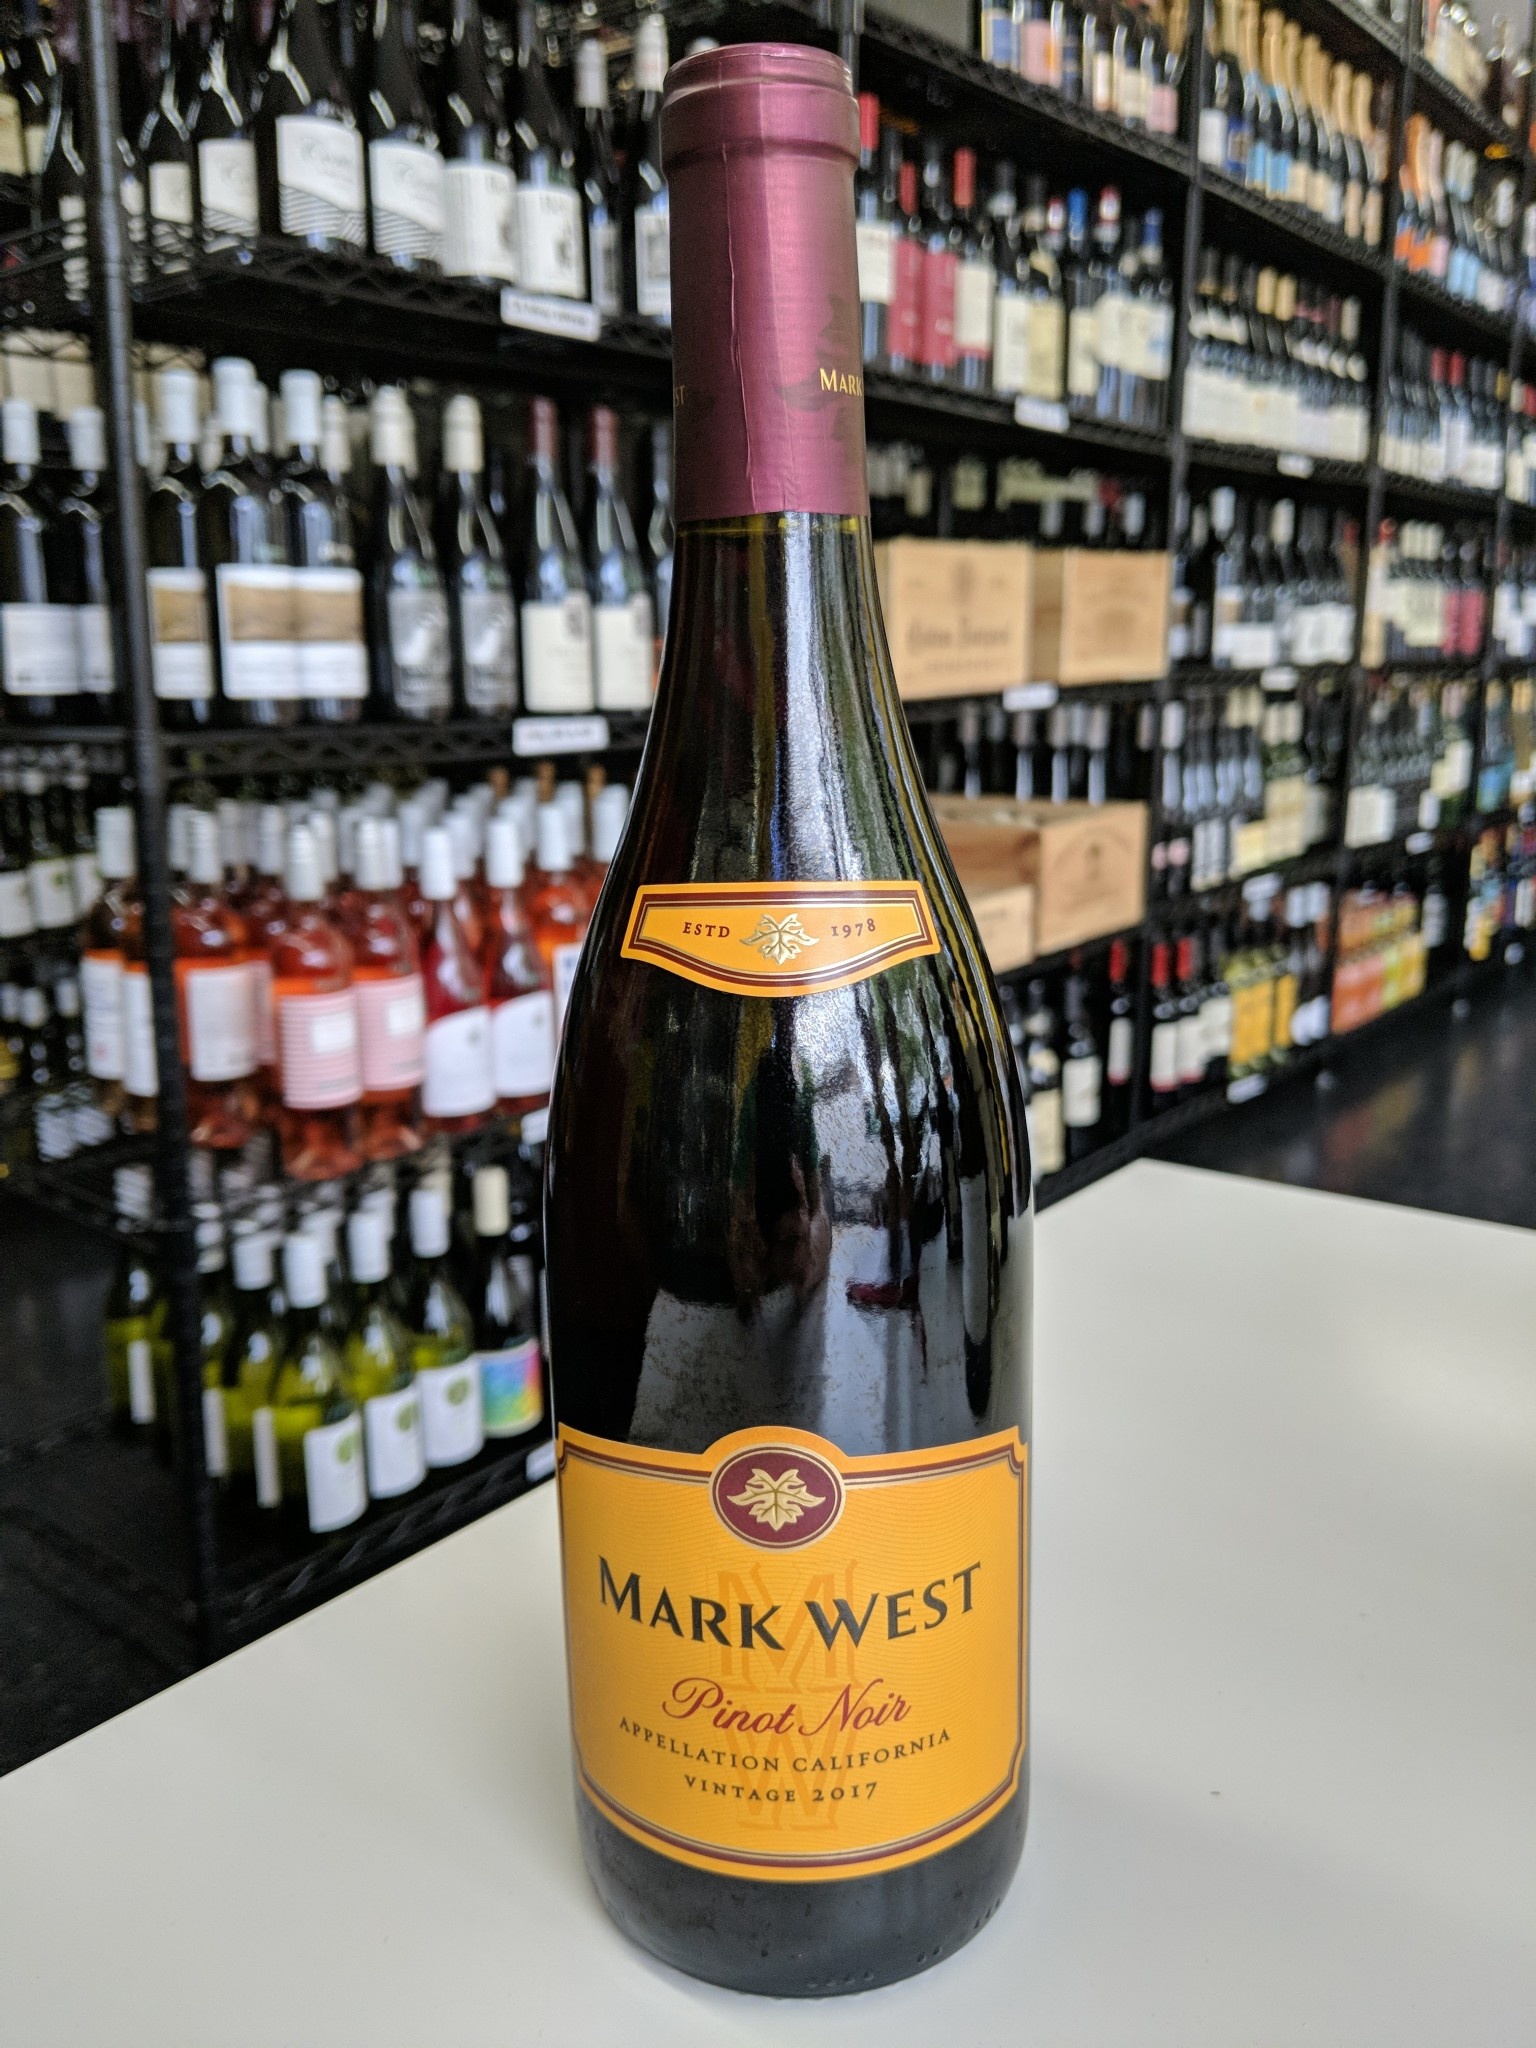 Mark West Pinot Noir Wine, 750 ml